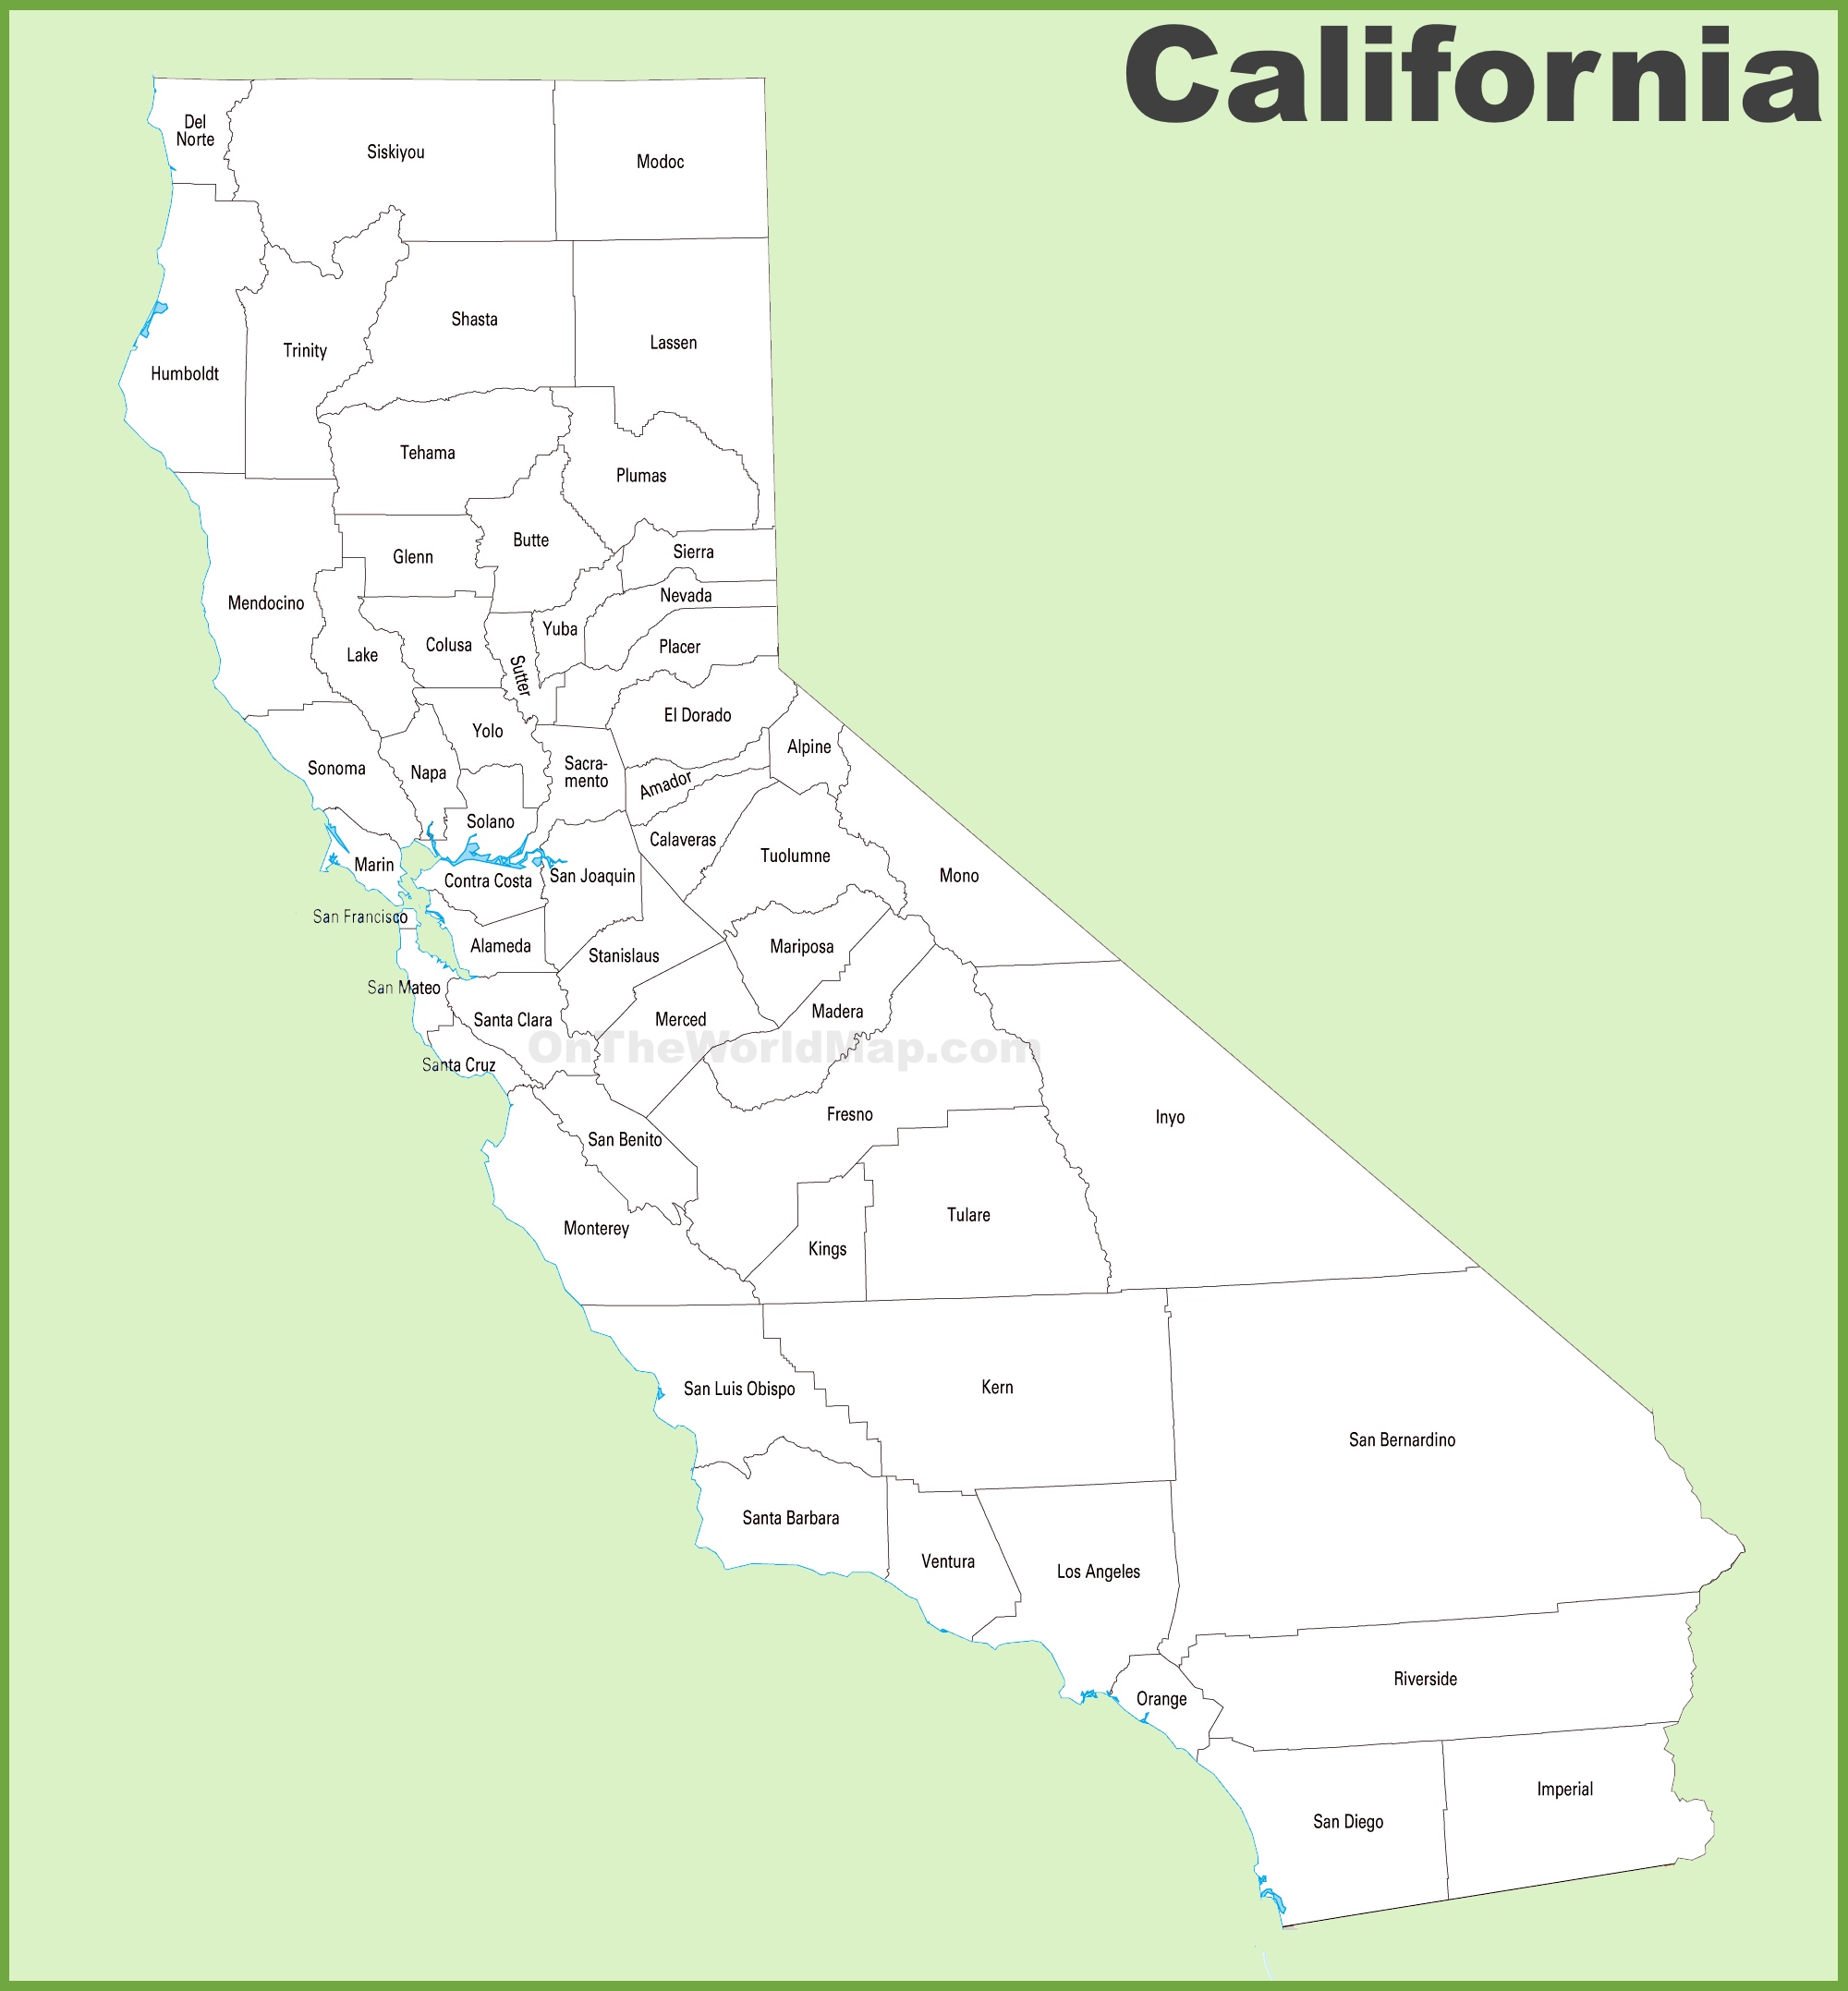 California county map